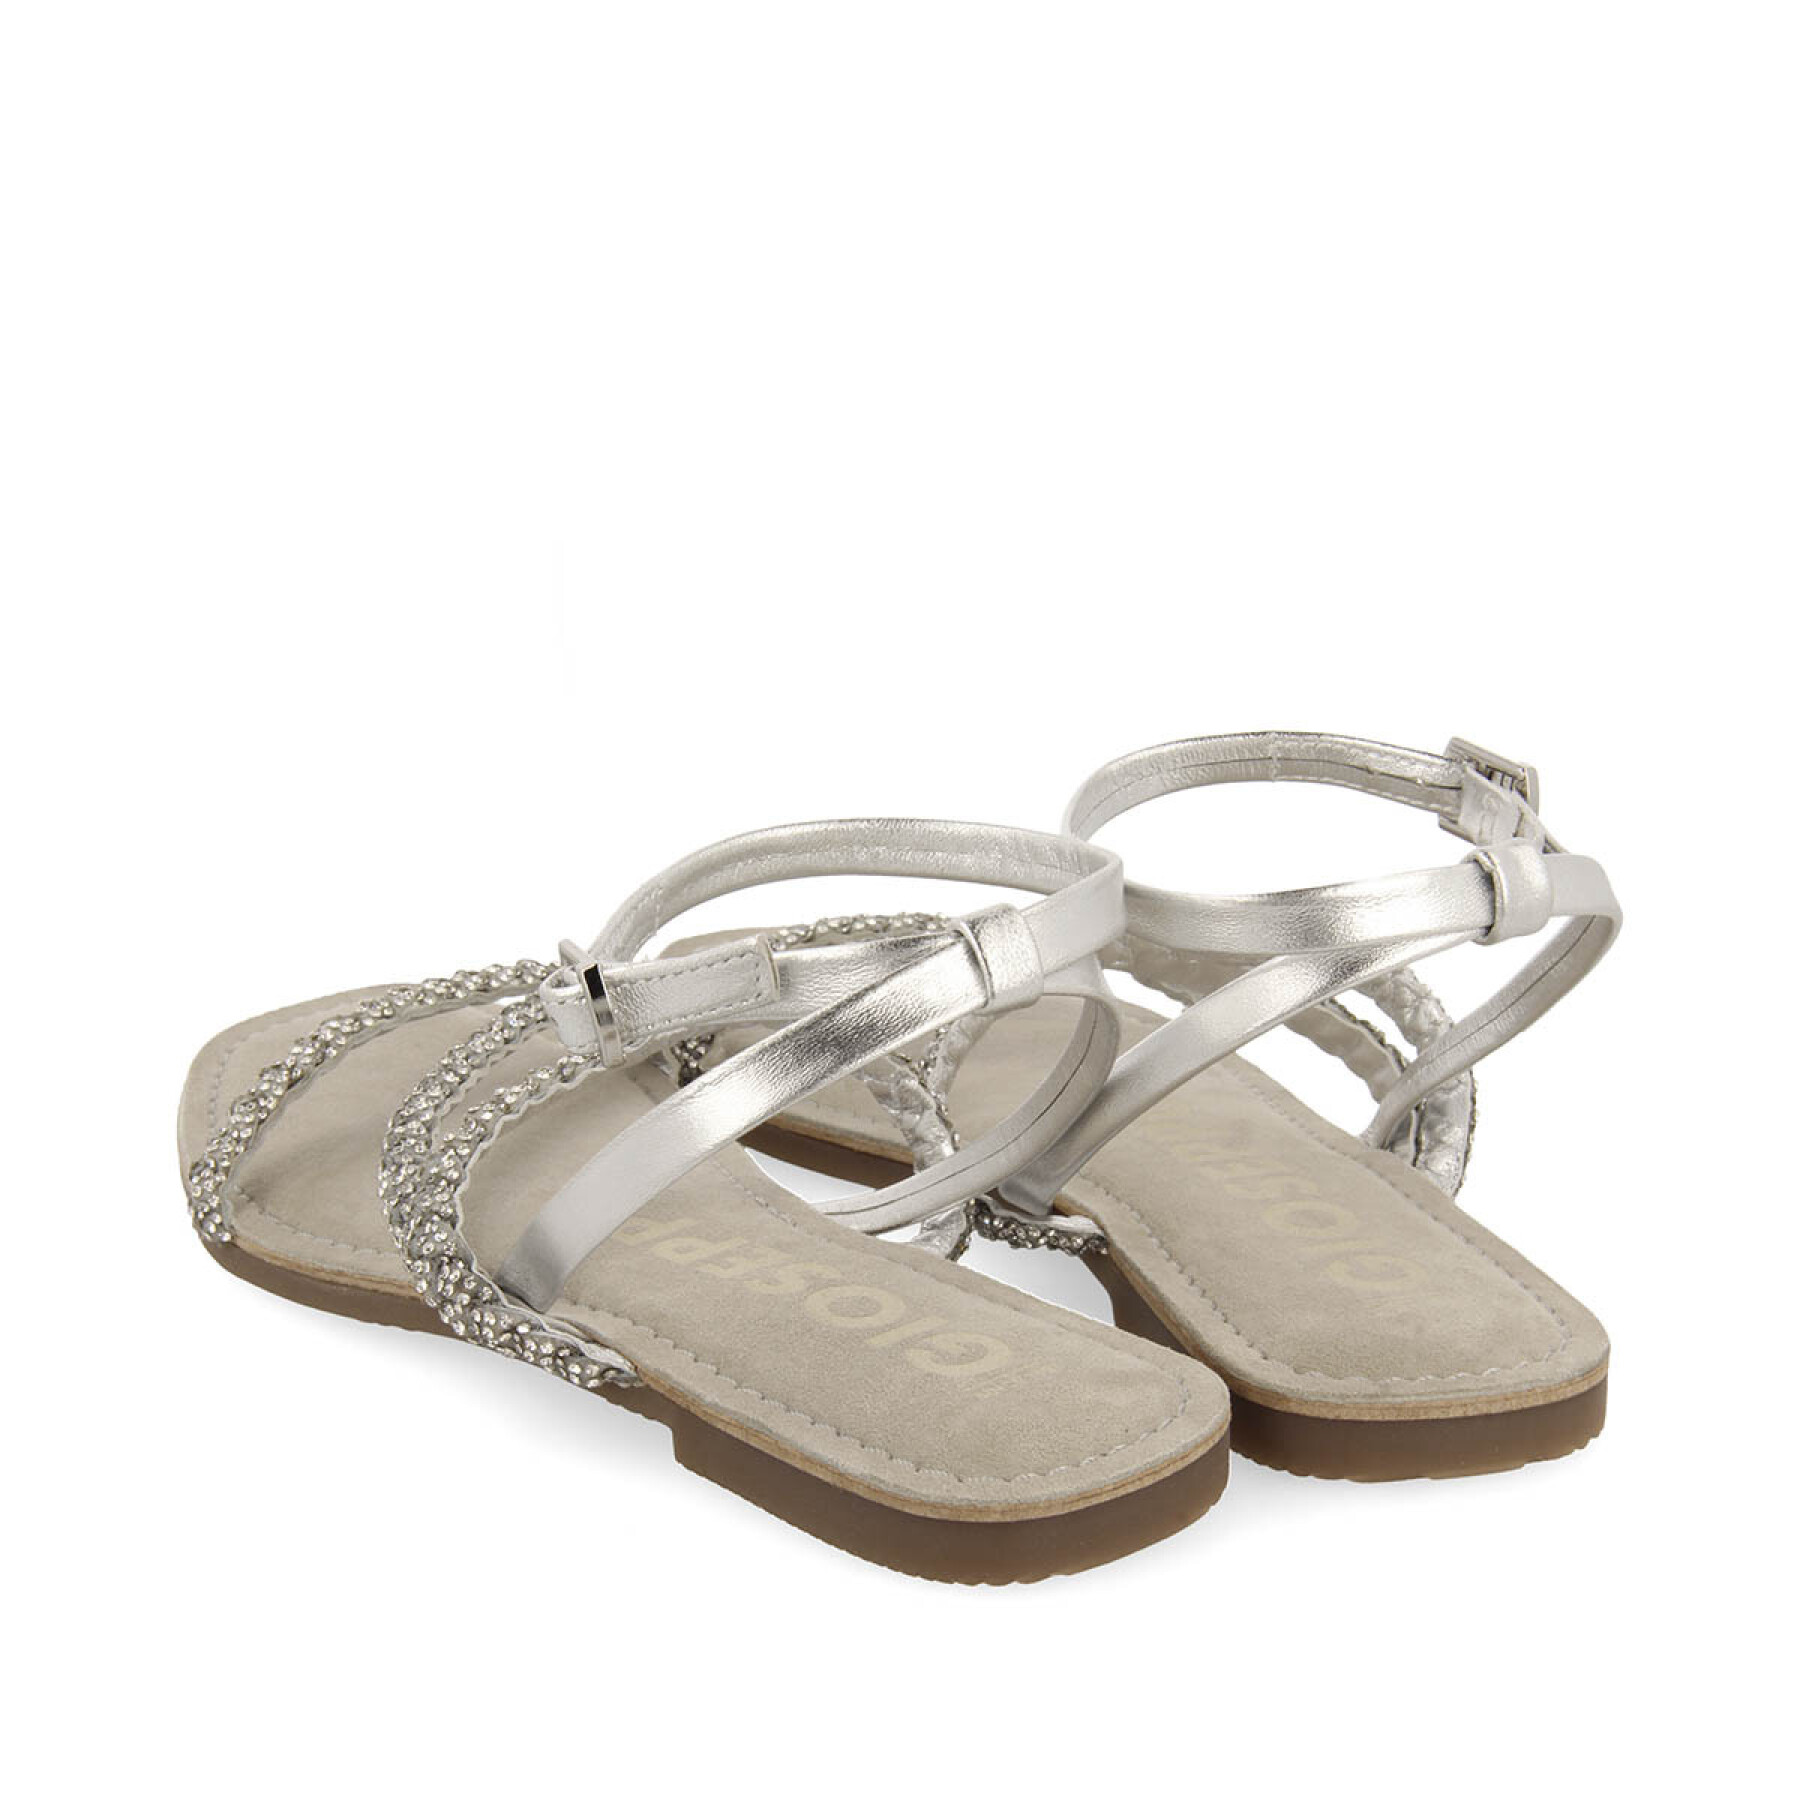 Women's sandals Gioseppo Sorlingas